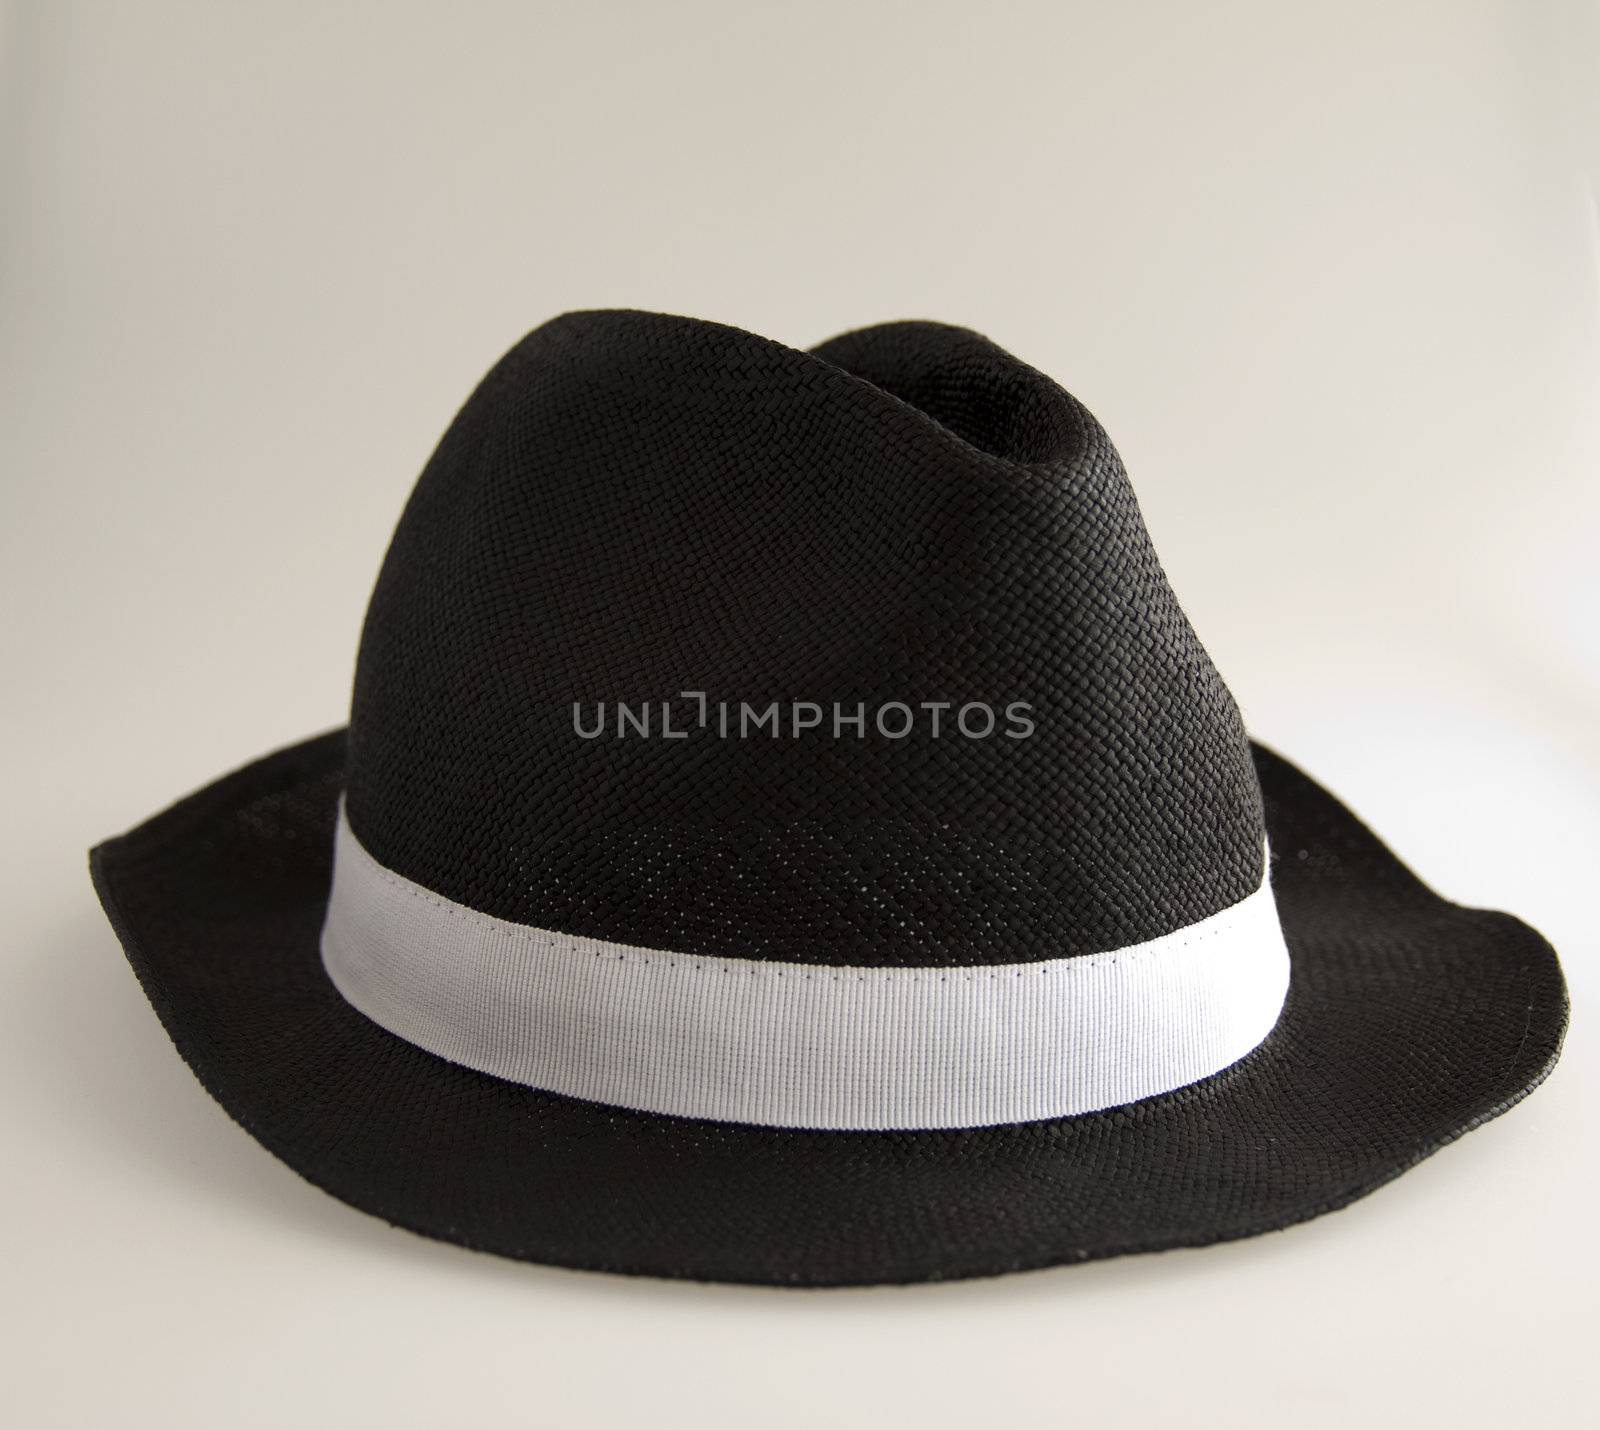 Man's hat by Koufax73